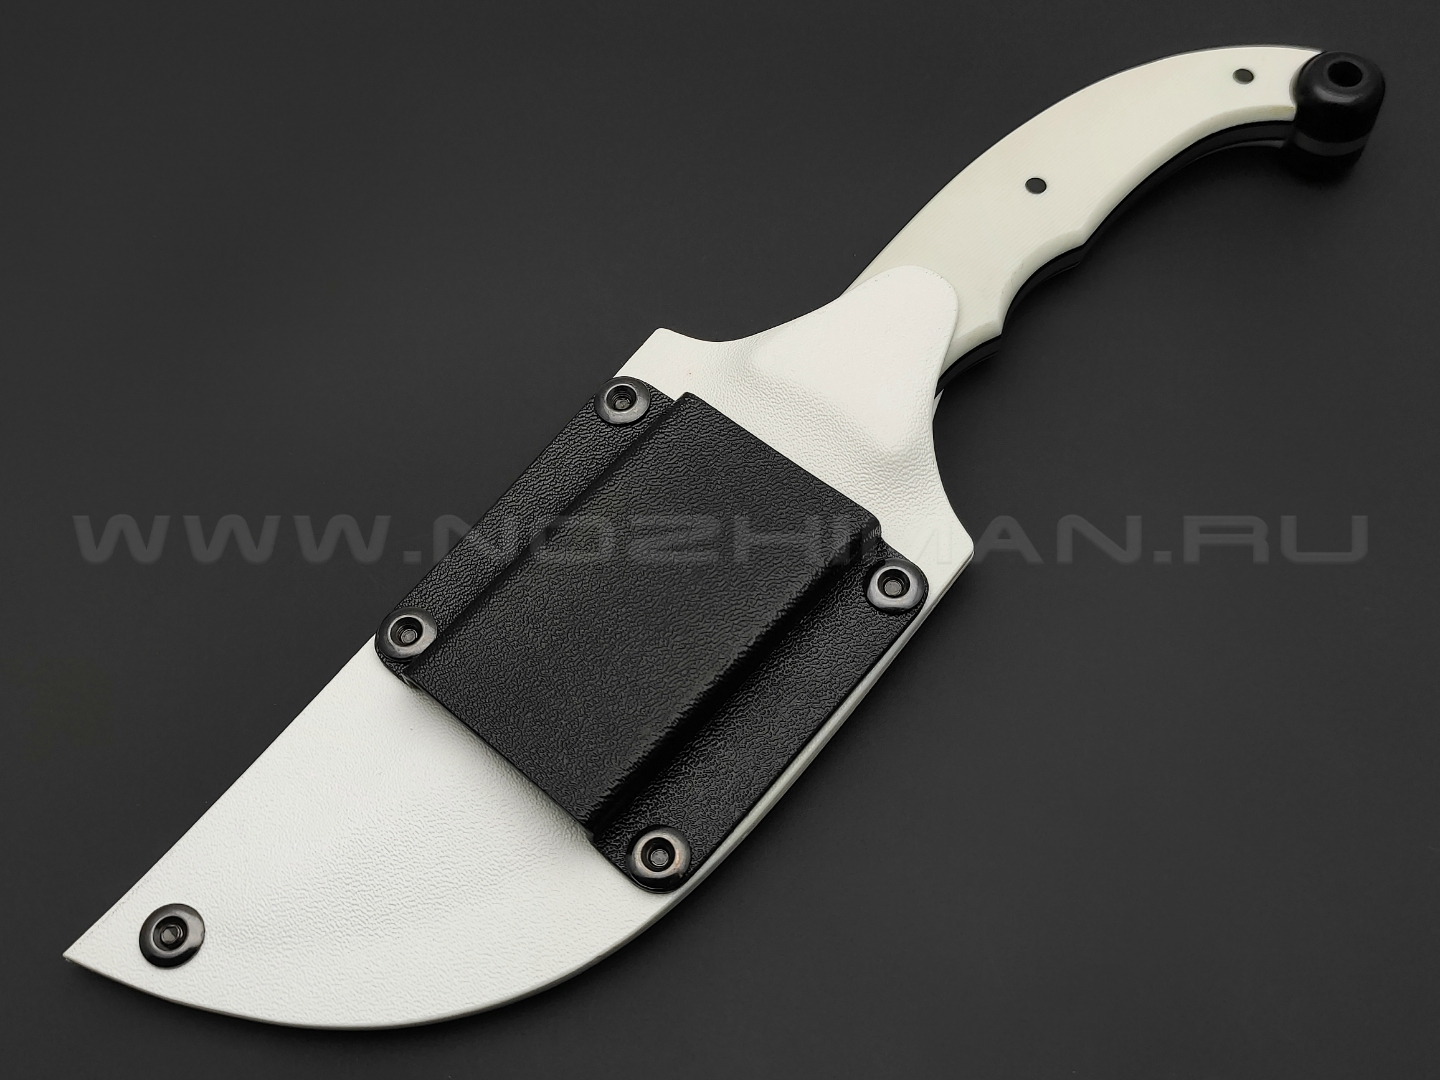 Бес Проблем нож Бессарабия Limited Edition 1 из 10, сталь N690, рукоять G10